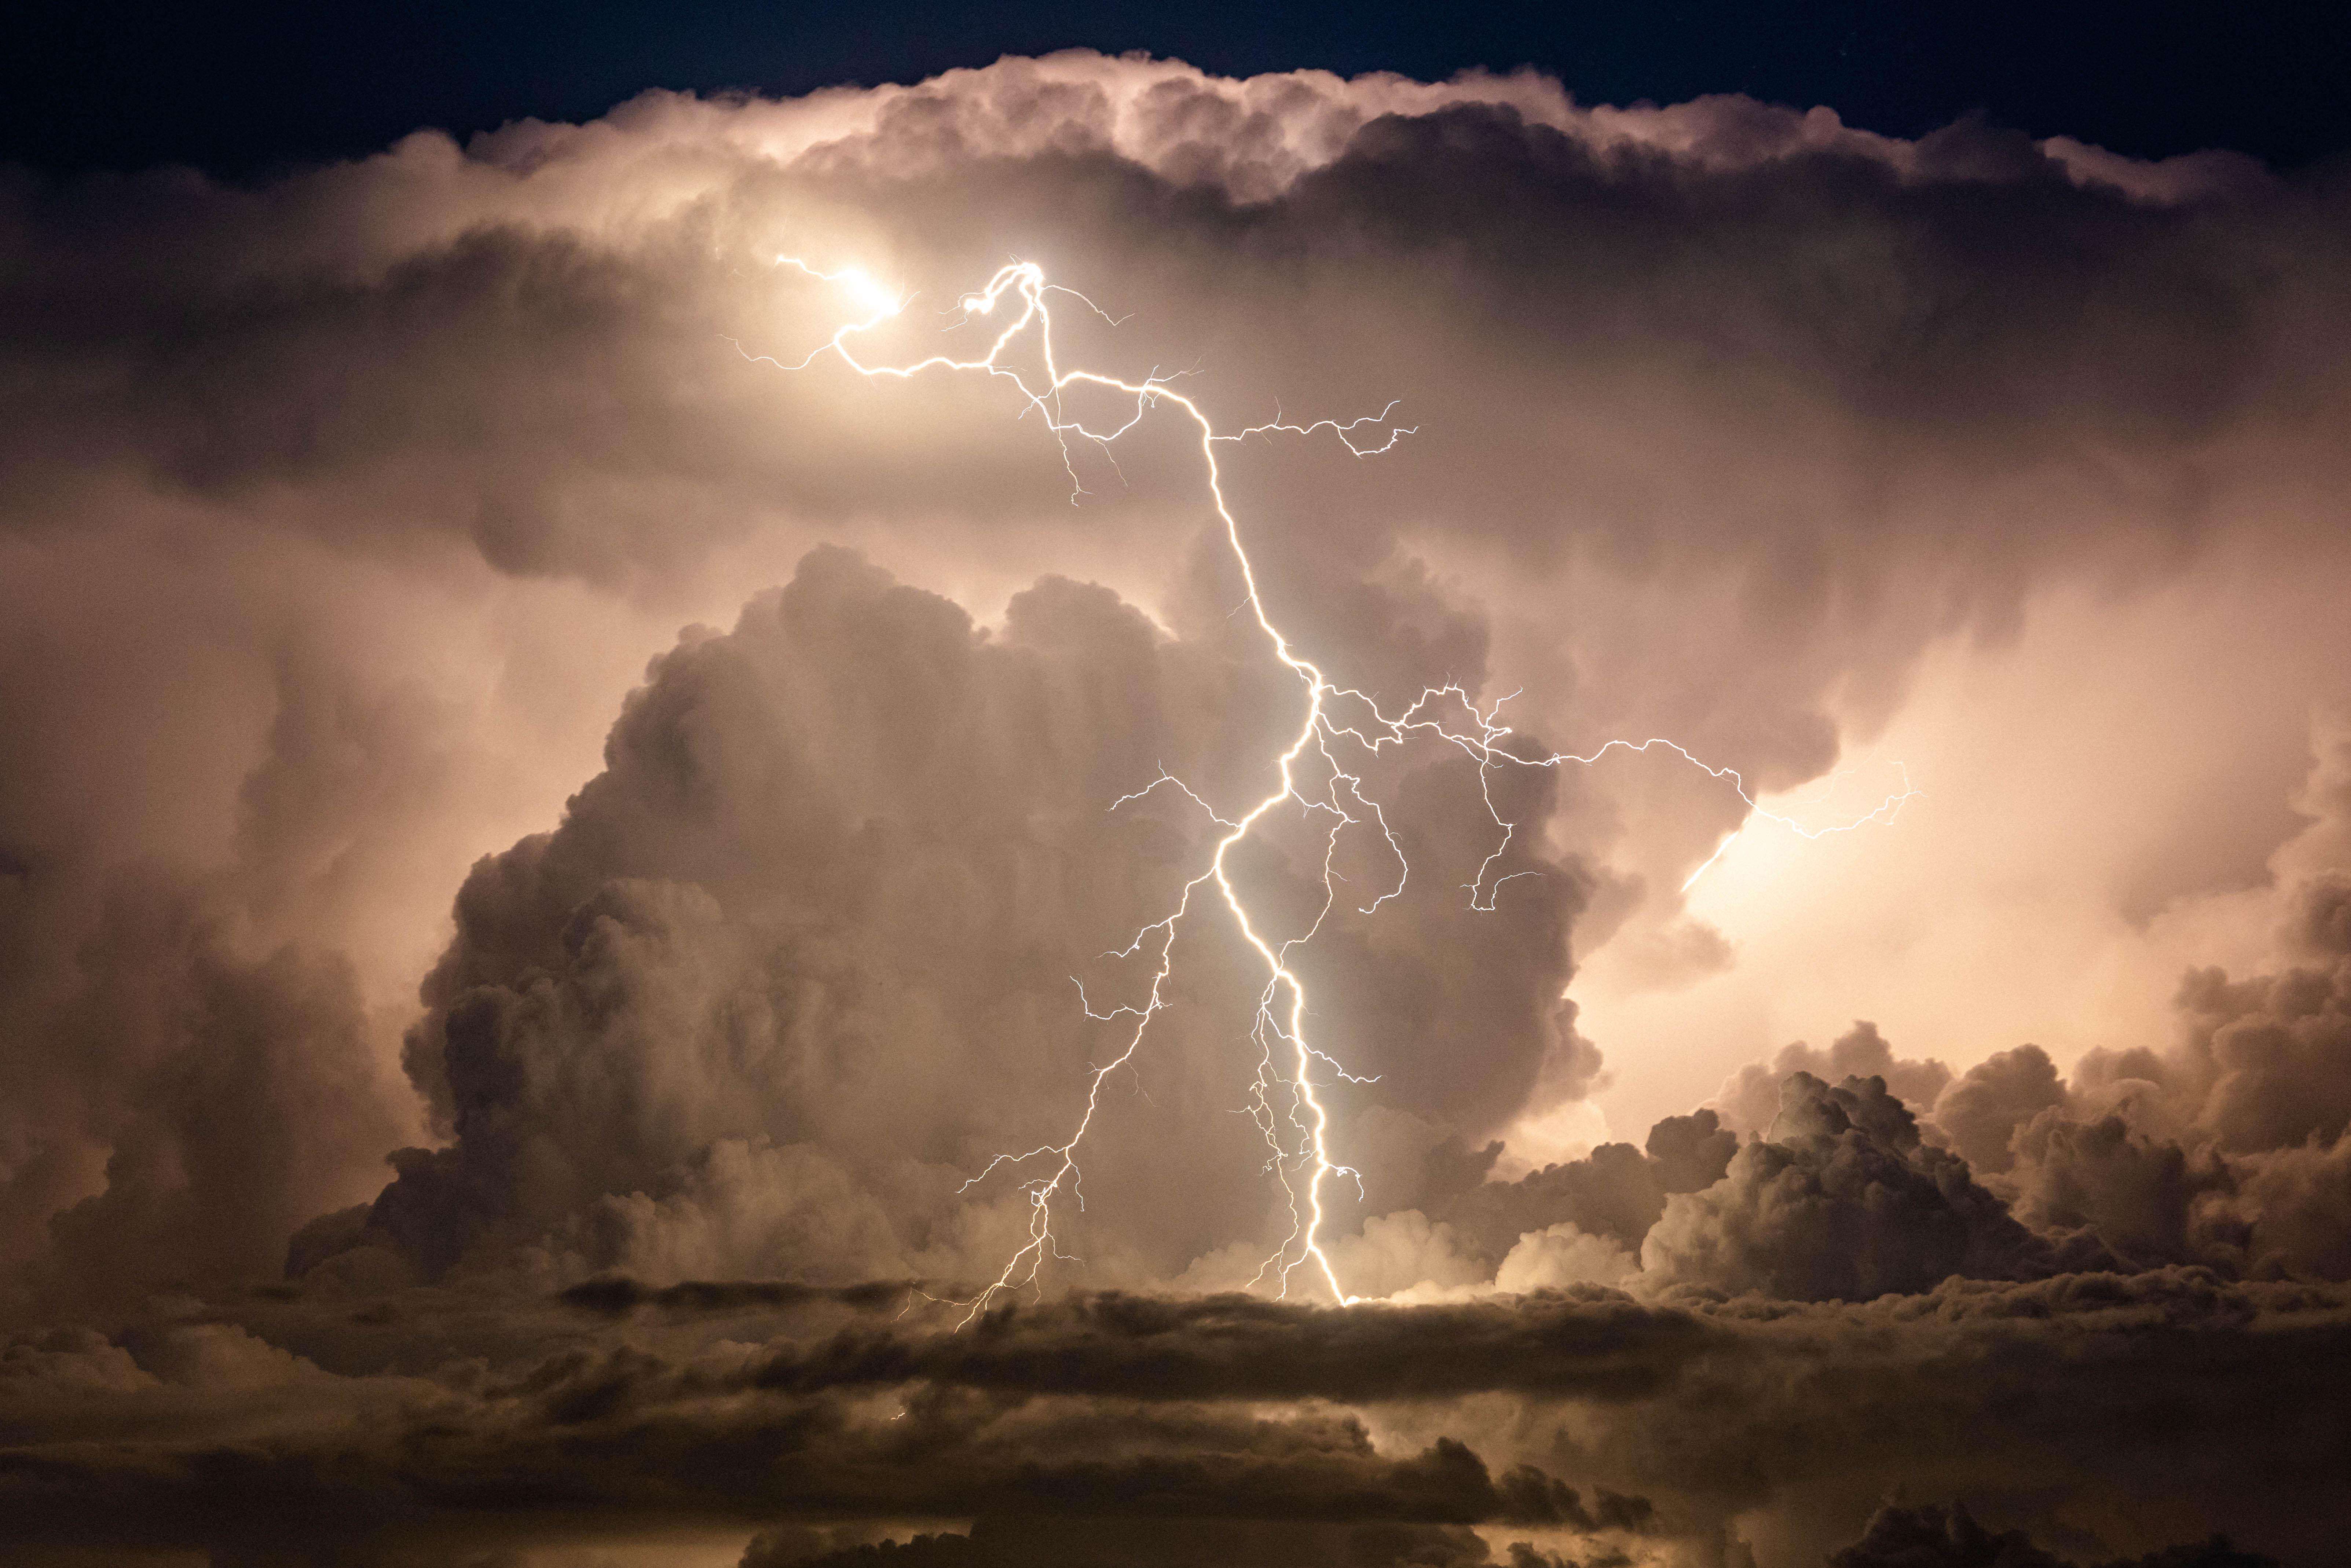 image showing ITAP of lightning